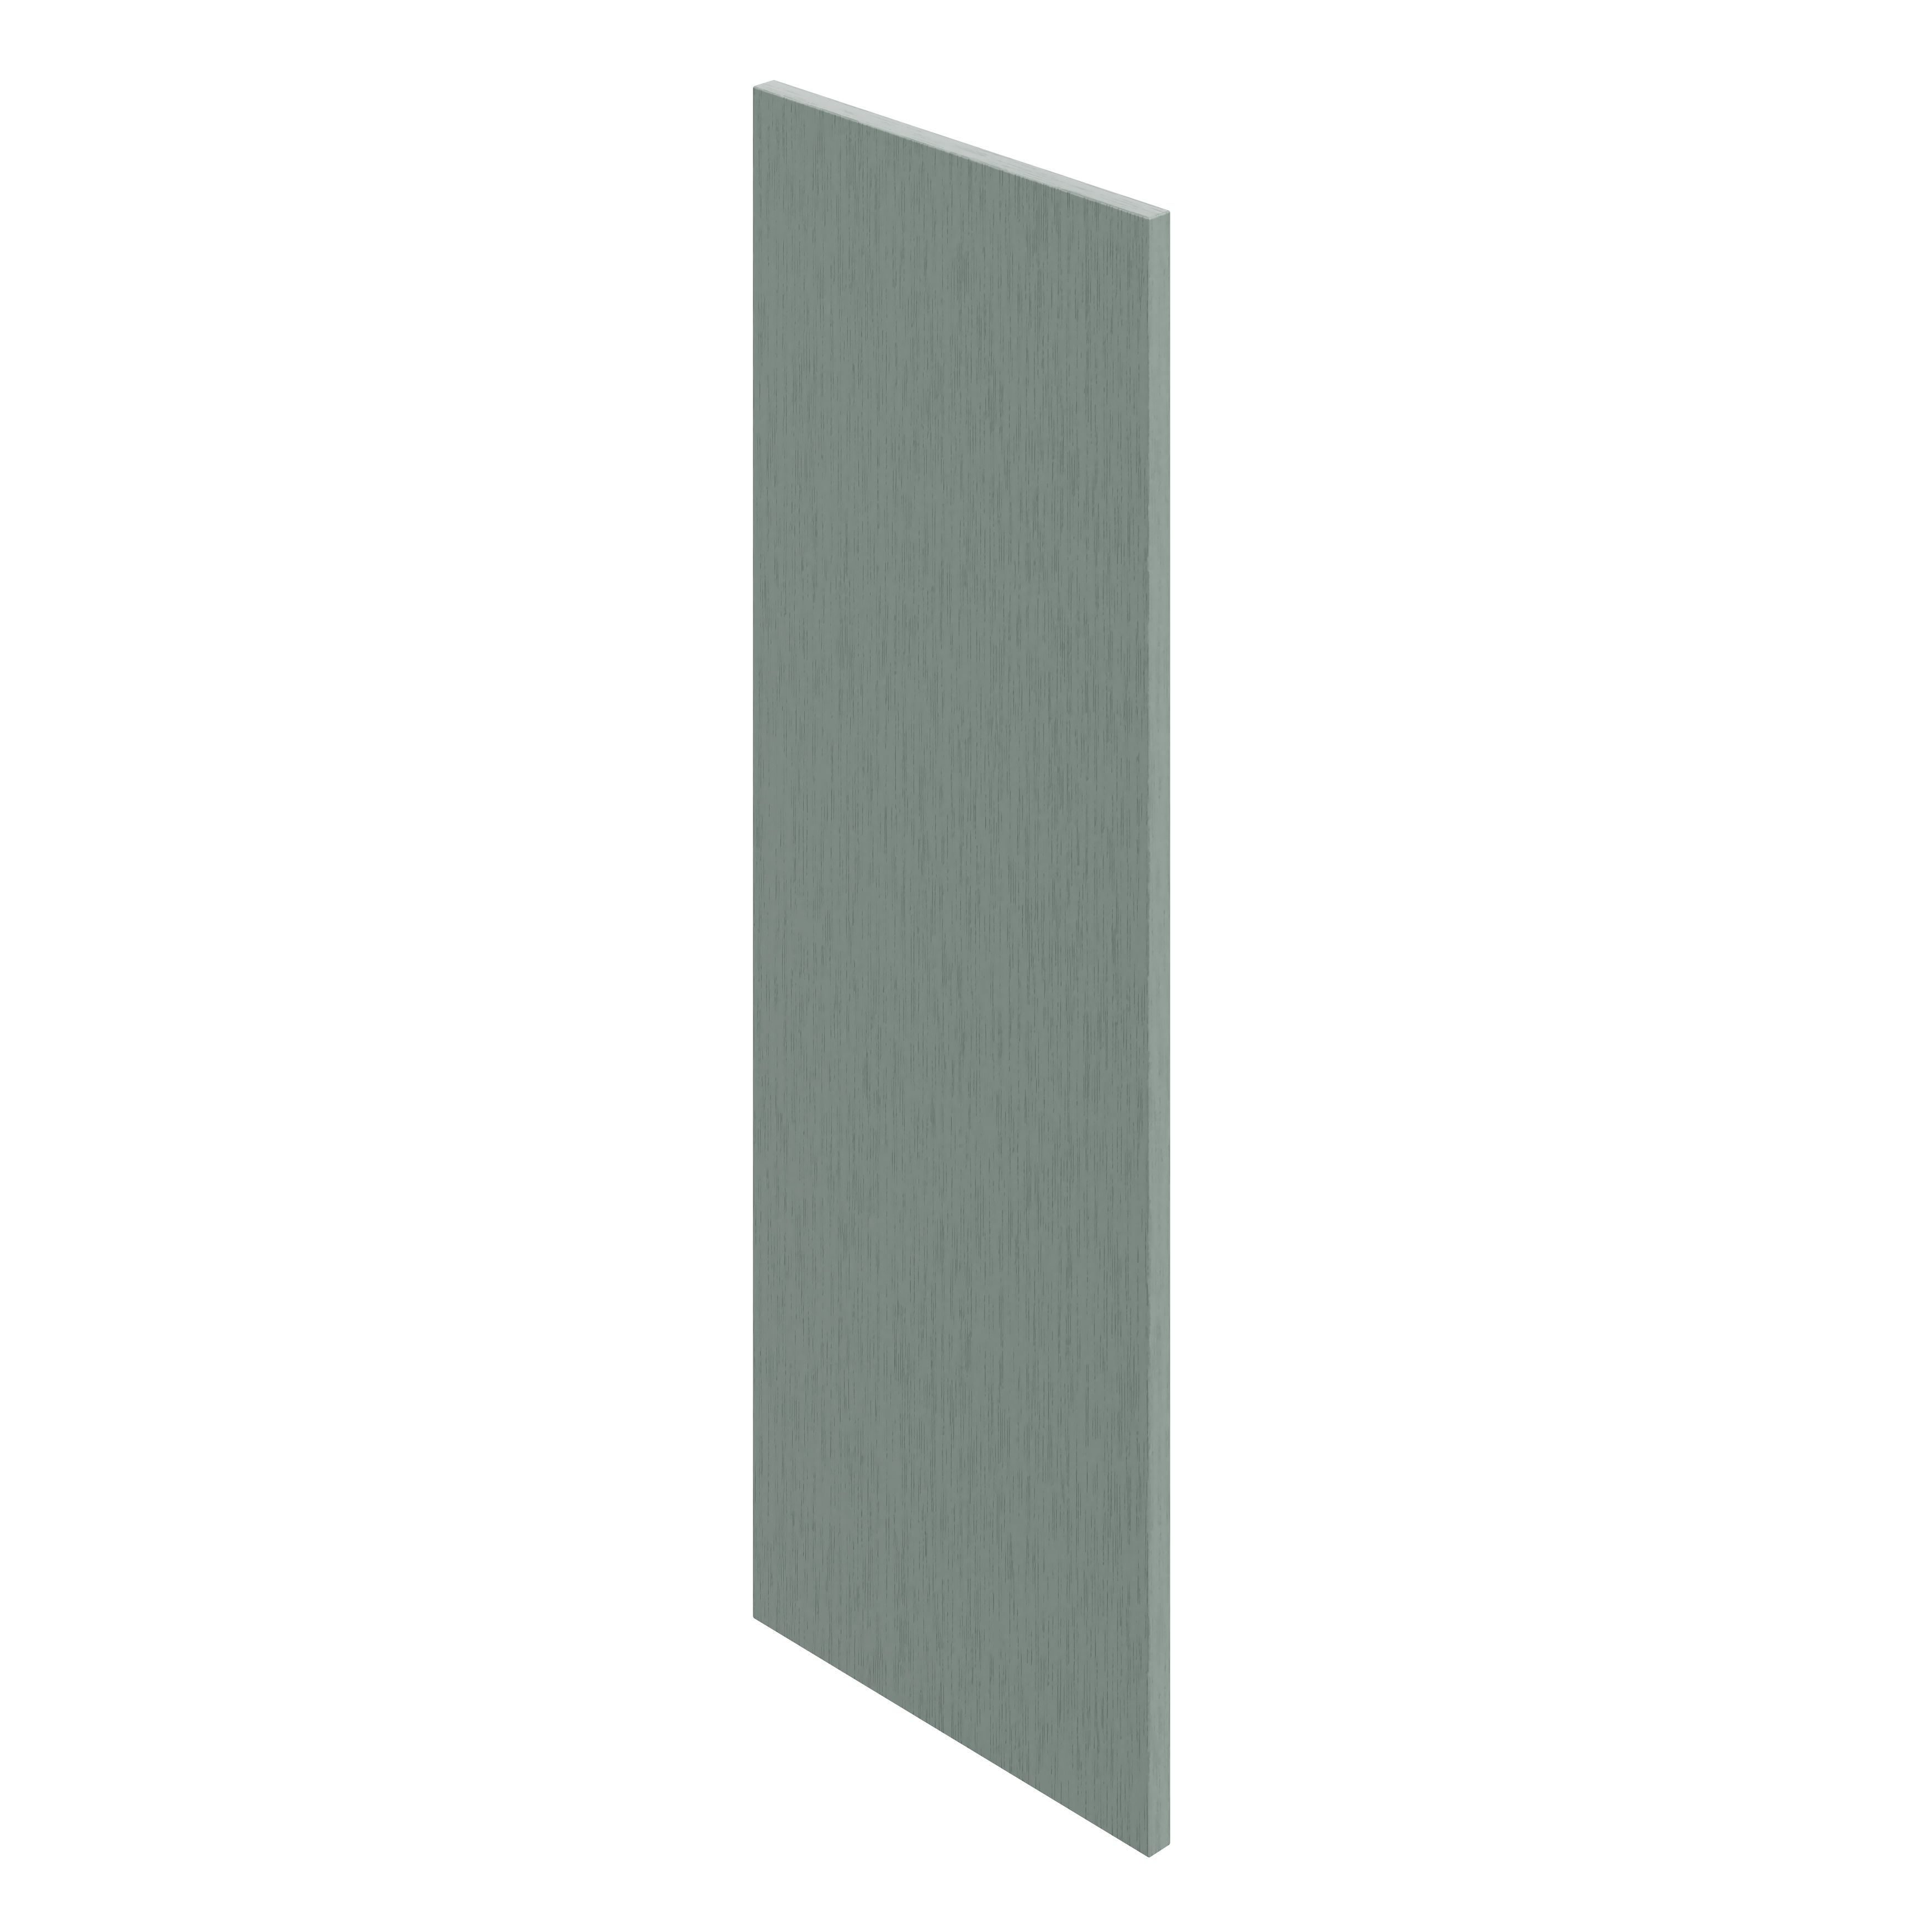 GoodHome Alpinia Matt Green Painted Wood Effect Shaker Tall Wall End panel (H)900mm (W)320mm